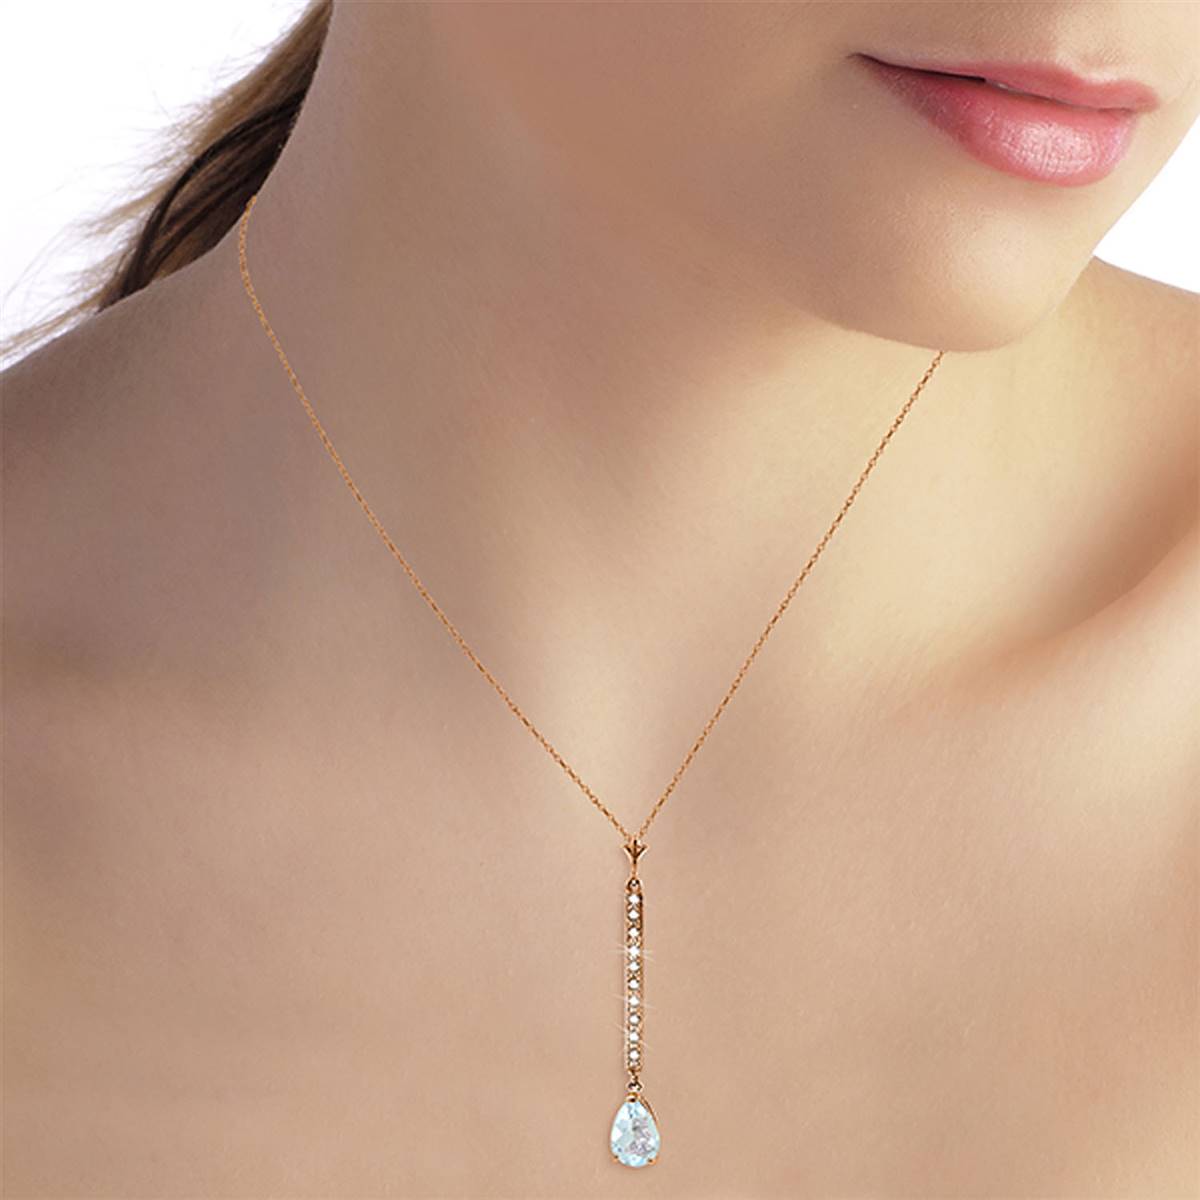 14K Solid Rose Gold Diamond & Aquamarine Necklace